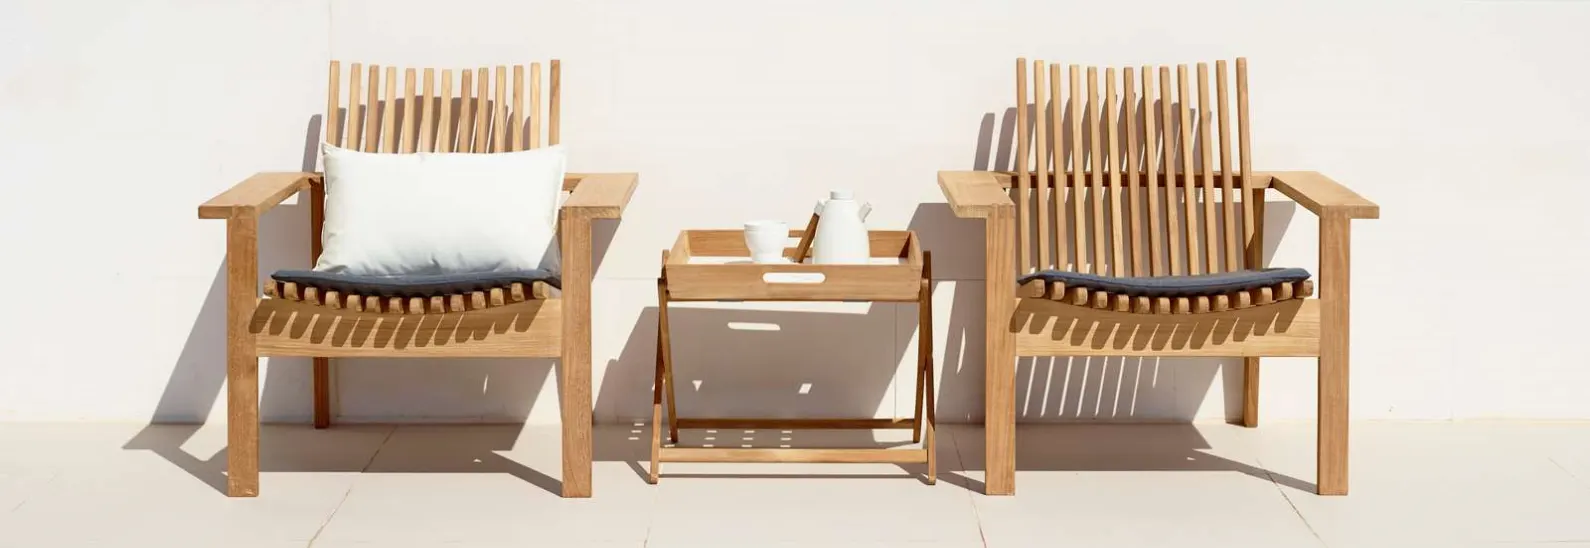 Best Acacia Wood Outdoor Furniture - 2020 Buying Guide - Teak Patio  Furniture World